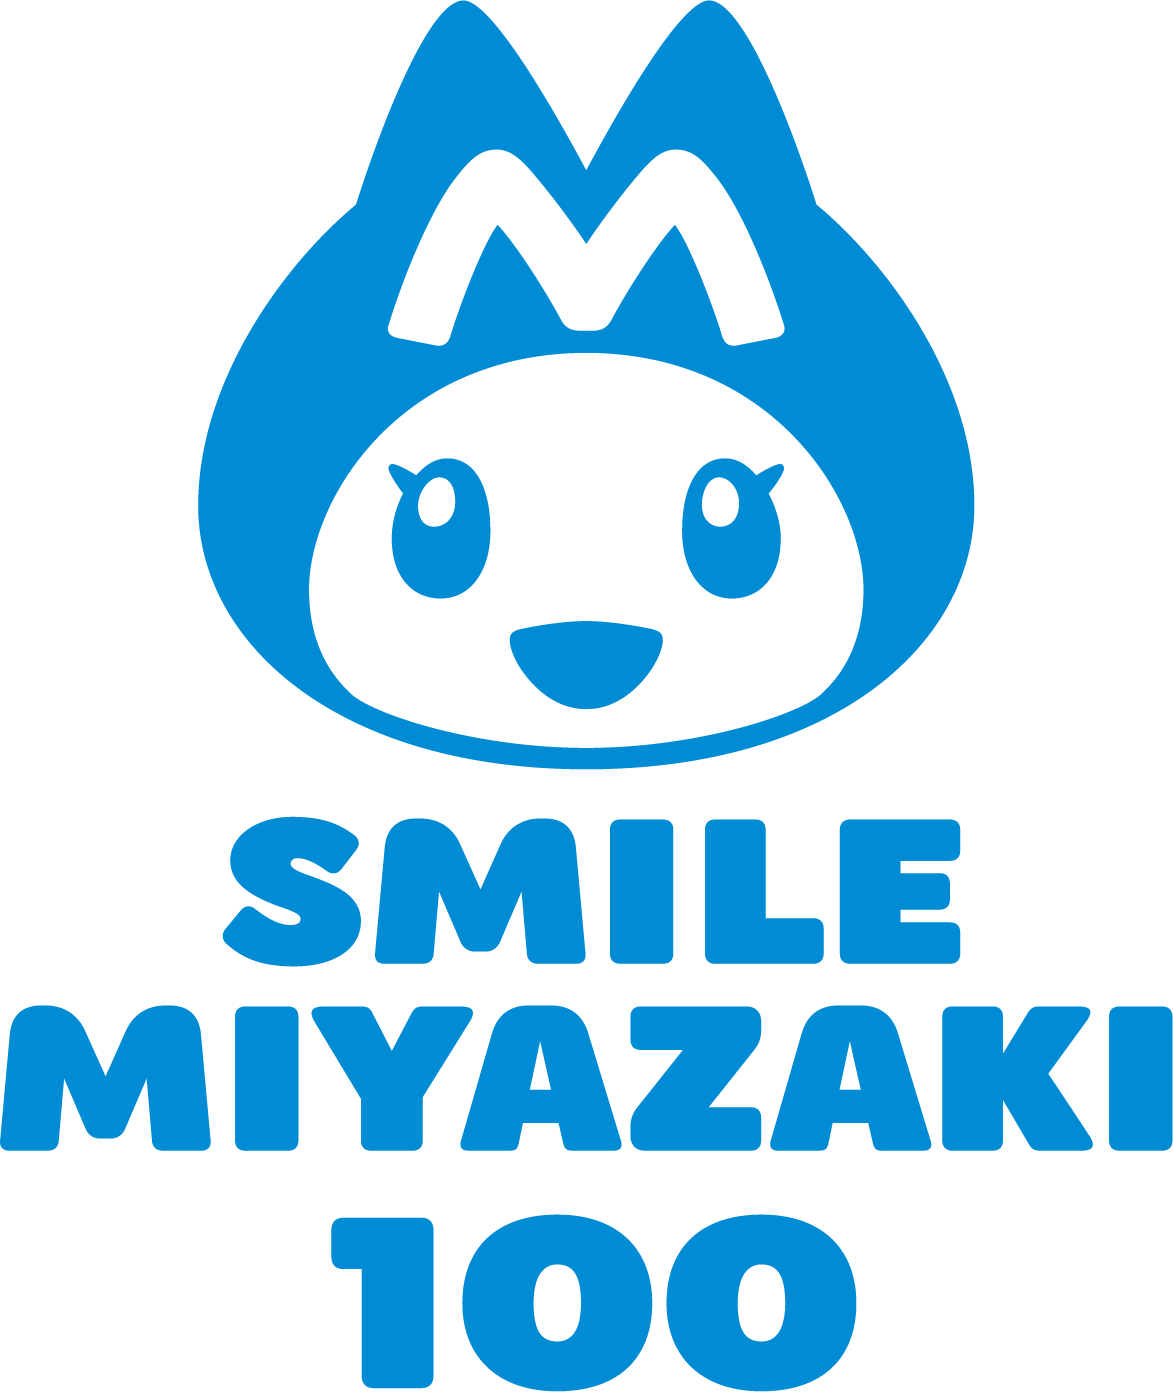 SMILE MIYAZAKI 100(color).png